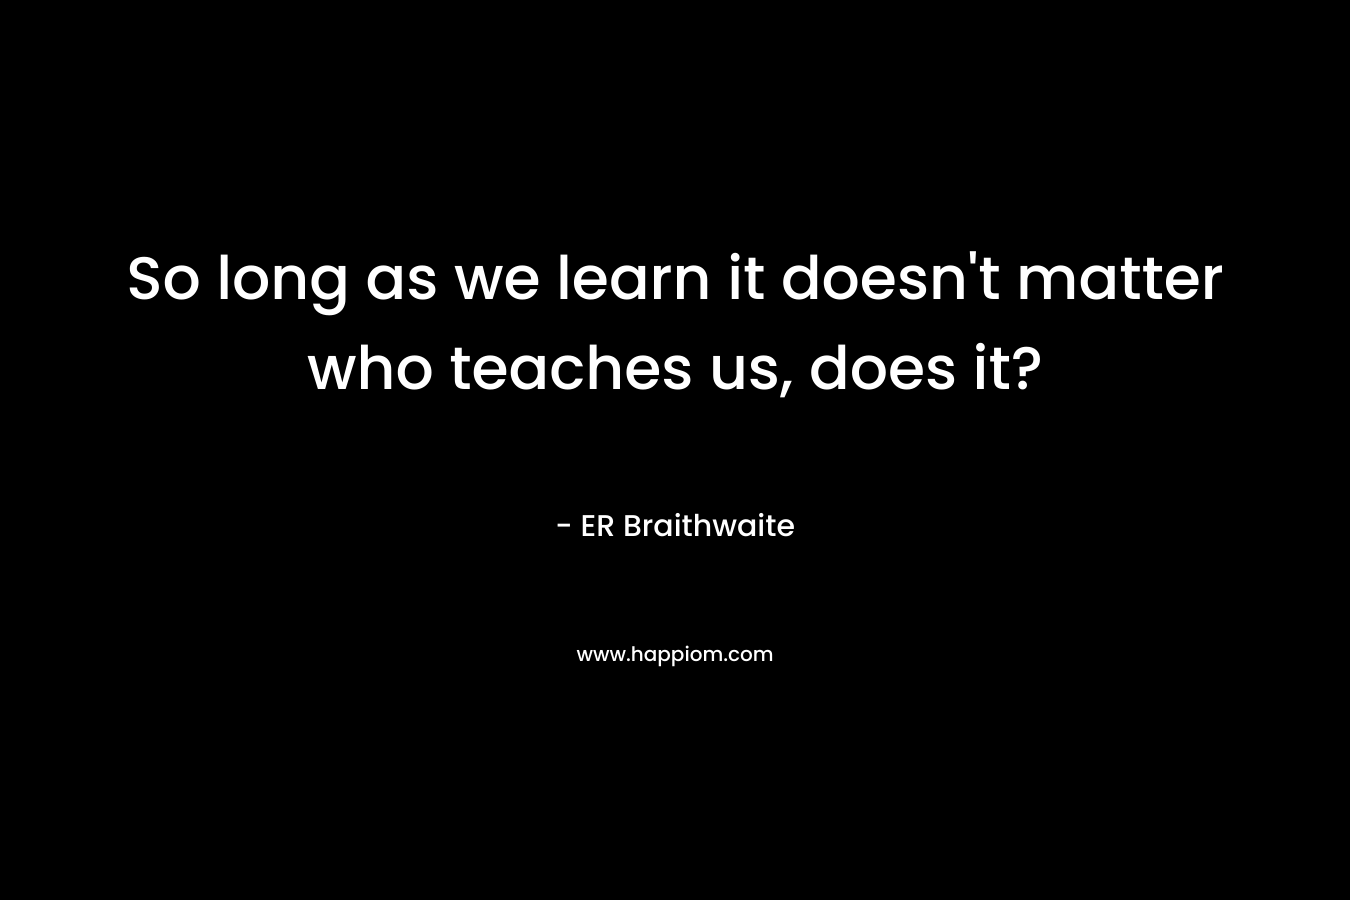 So long as we learn it doesn’t matter who teaches us, does it? – ER Braithwaite